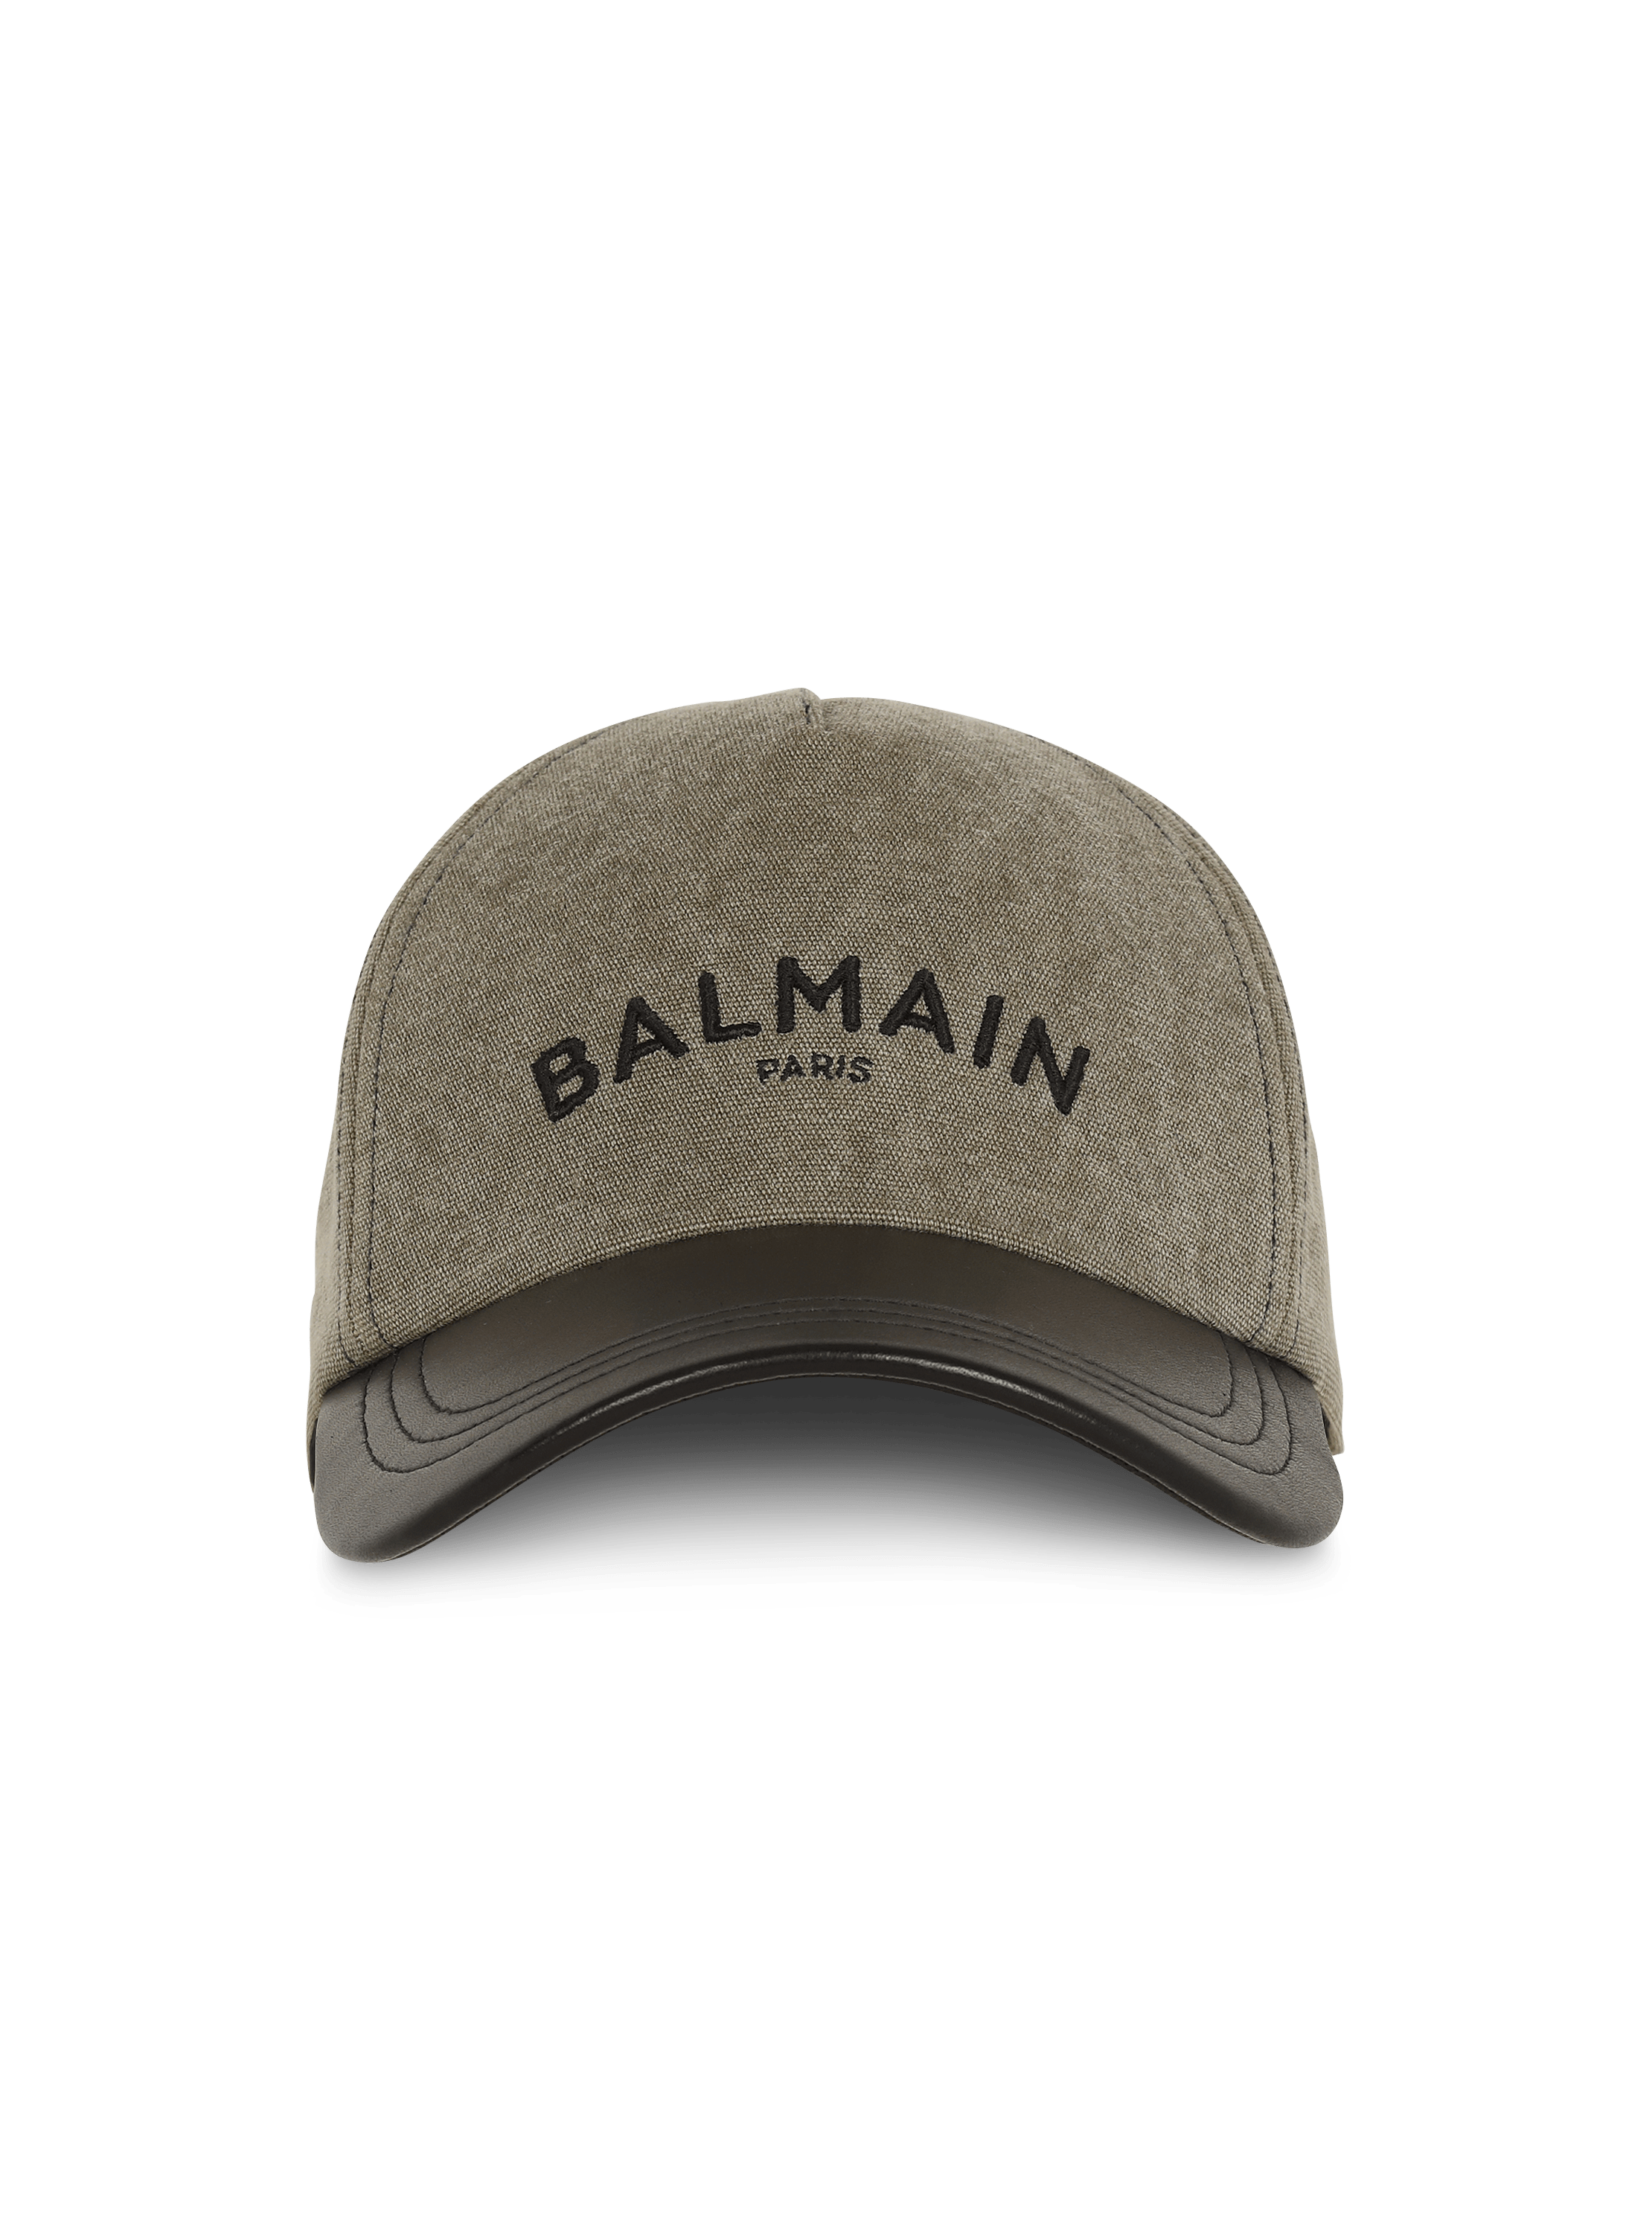 Balmain巴尔曼标志棉质棒球帽